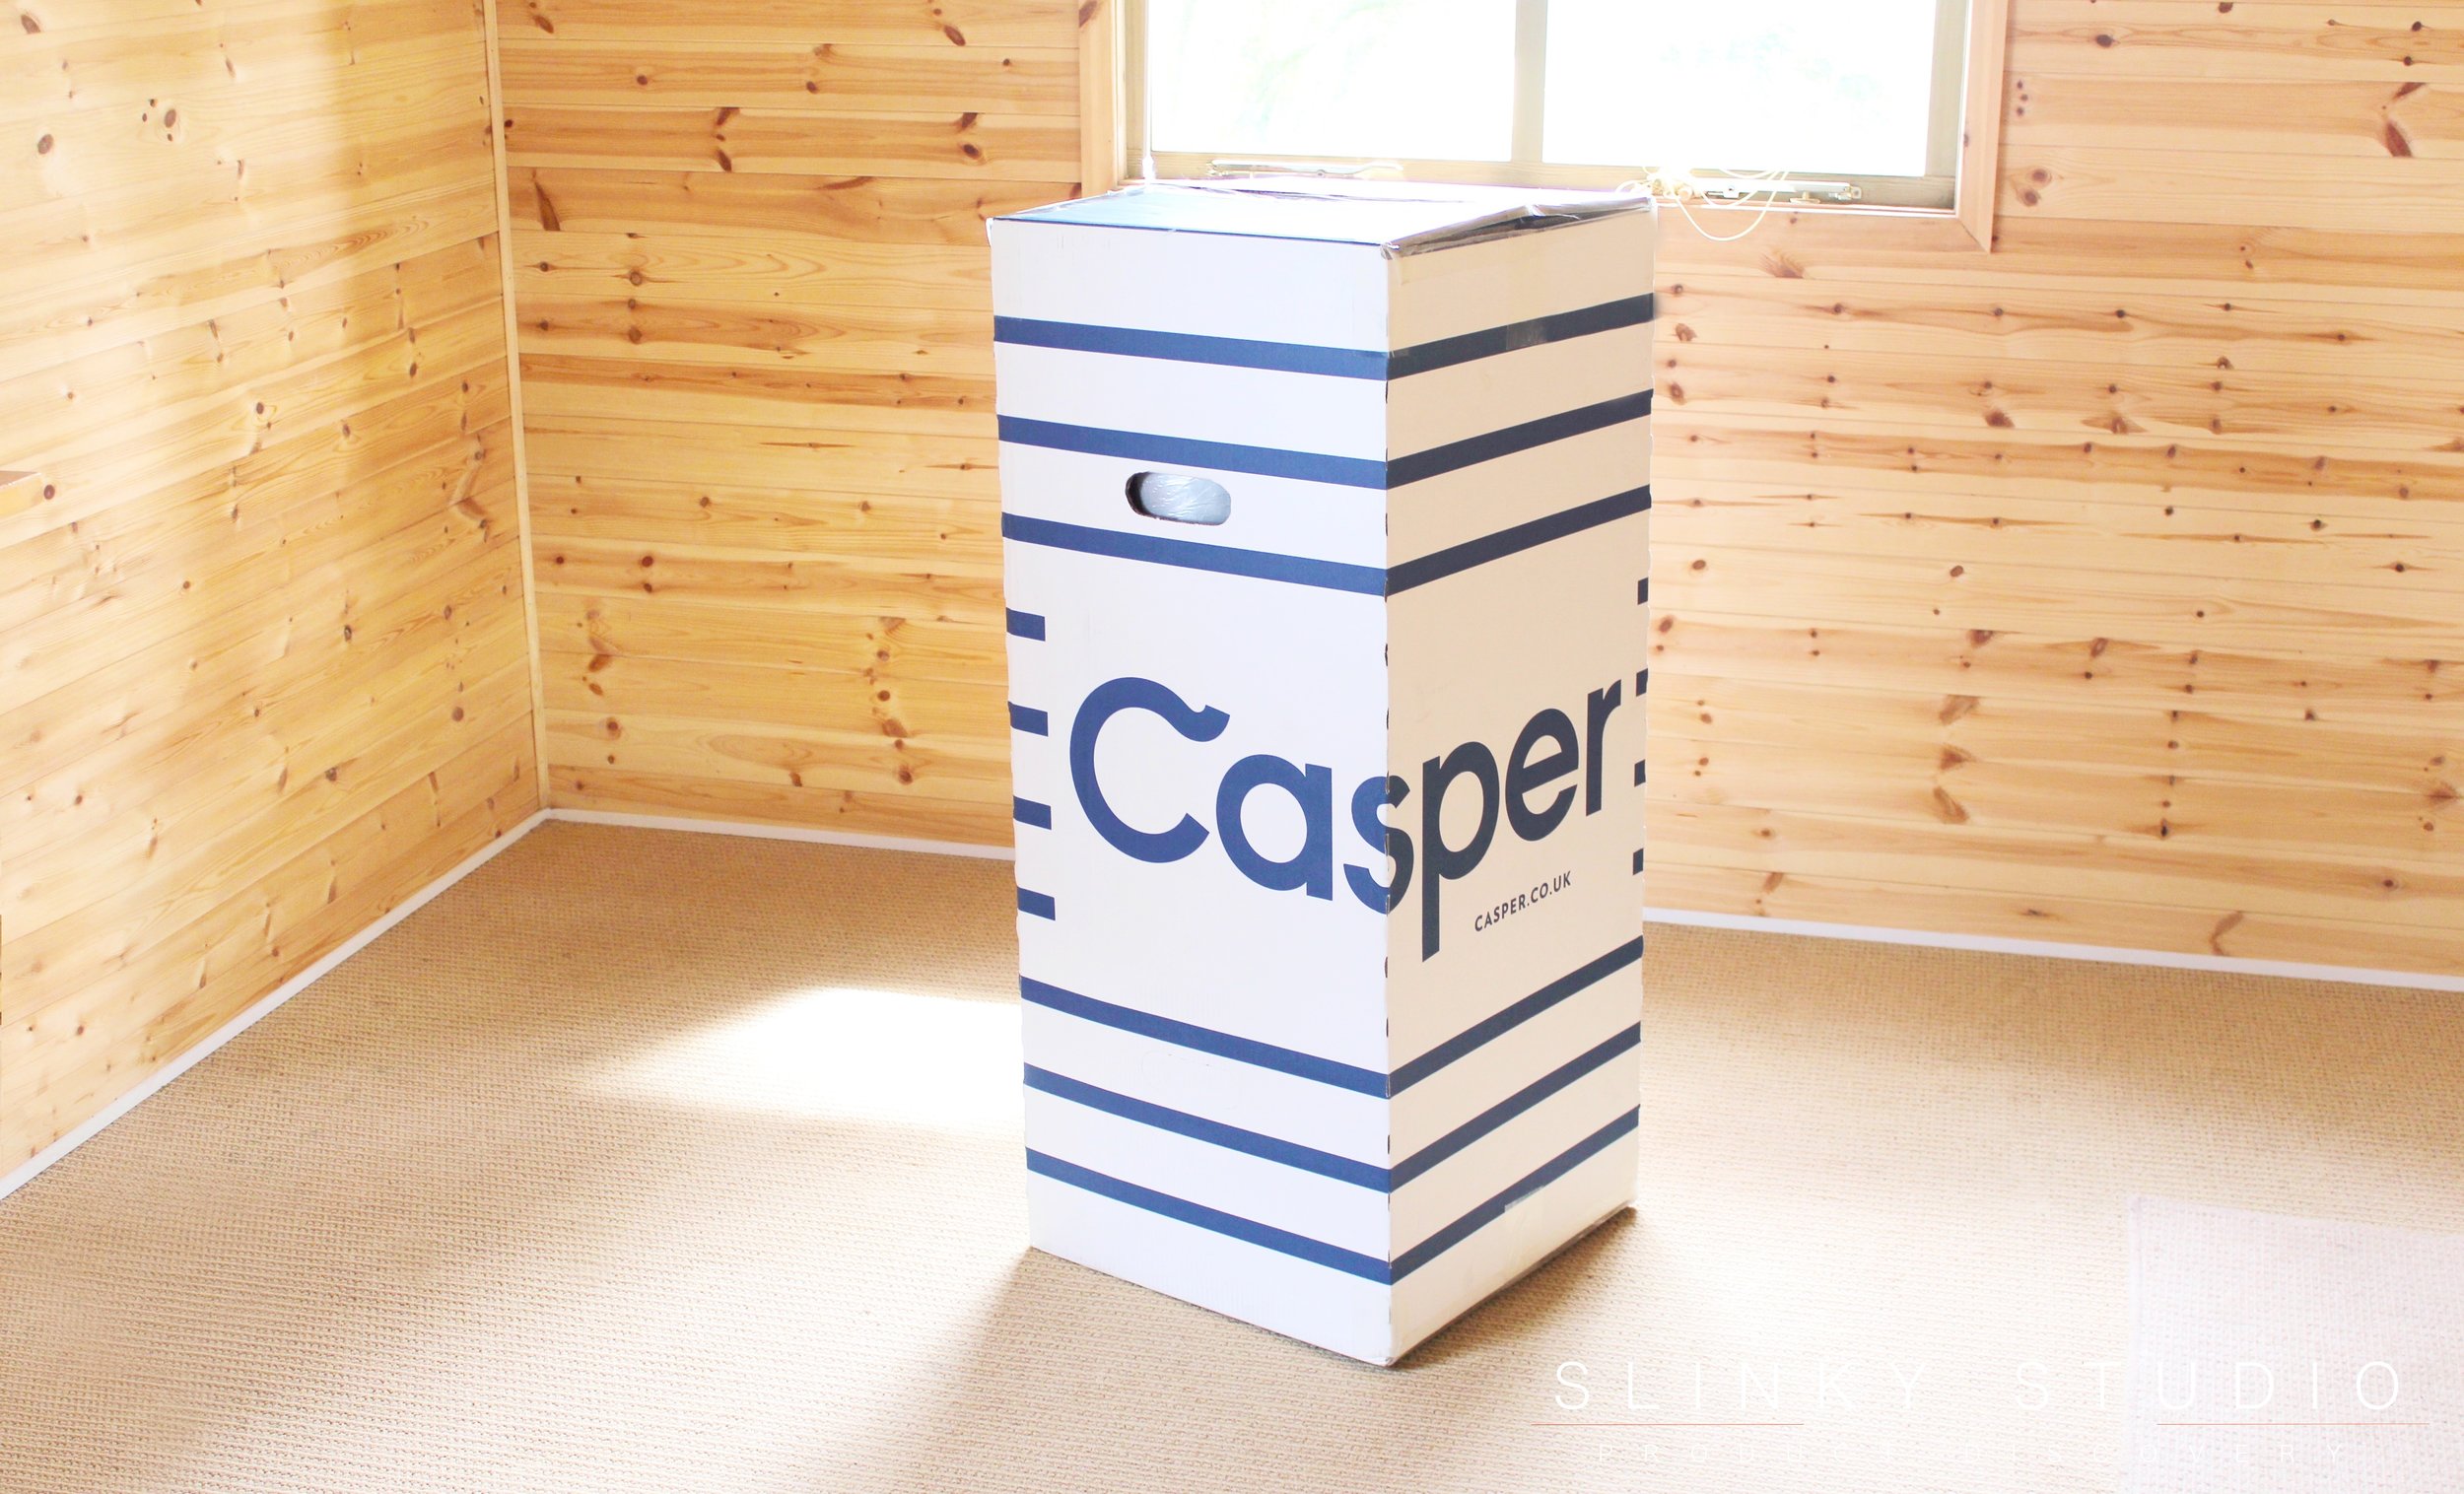 casper mattress comes in a box